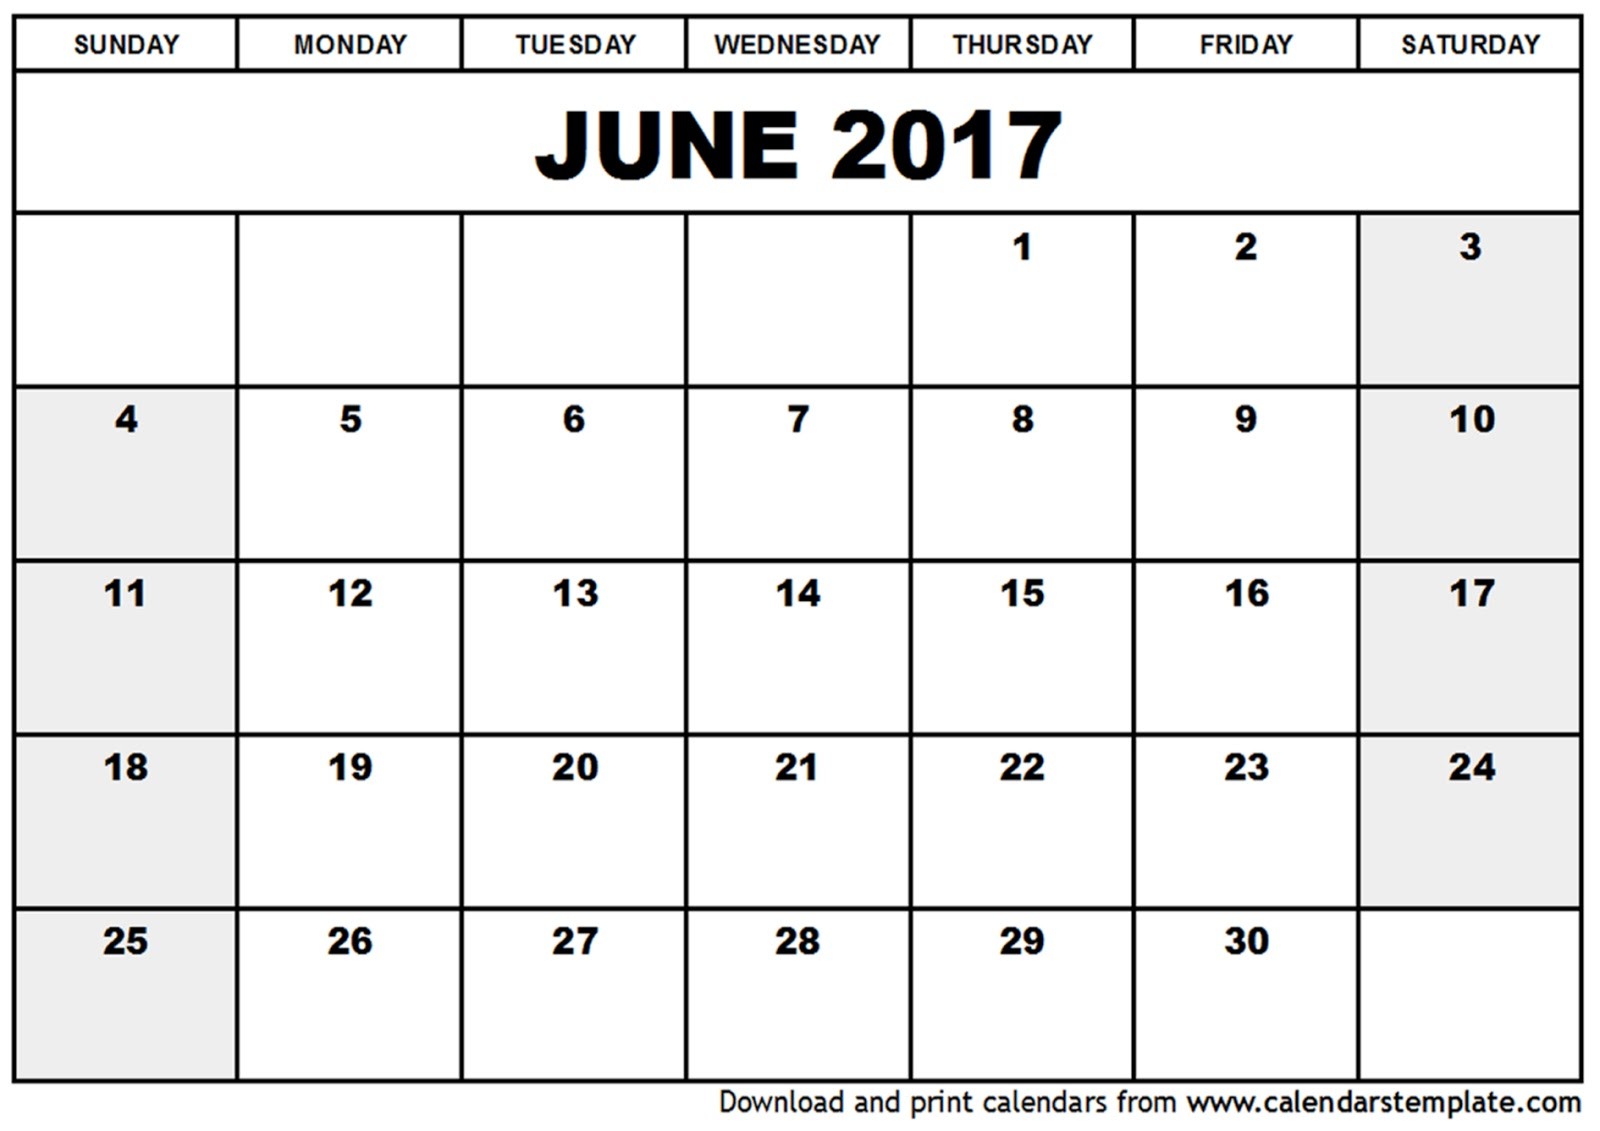 Free Online Printable Calendar Free Printable Calendar Free Printable Calendar June